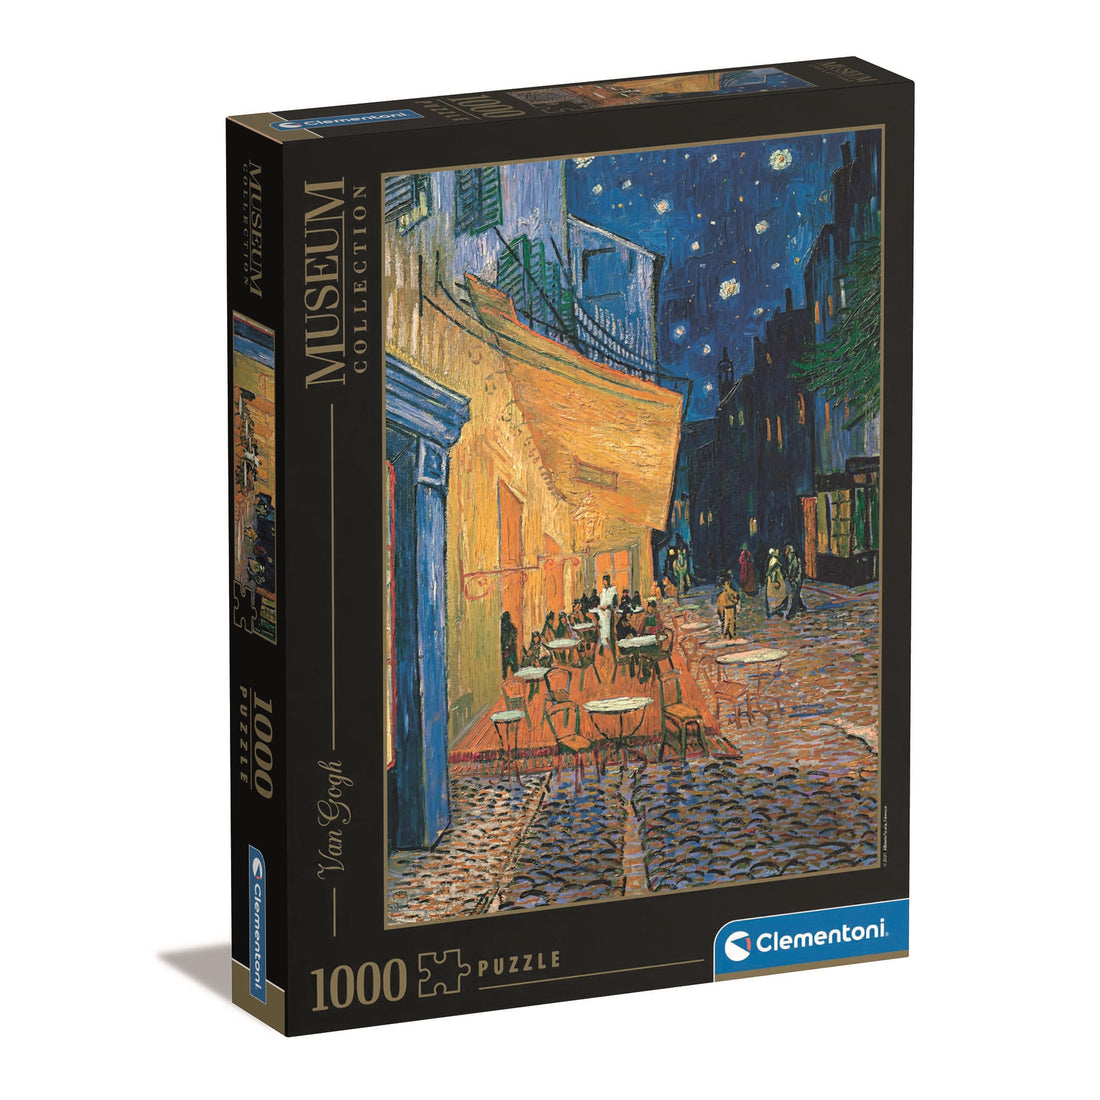 Puzzles - 1000 piece